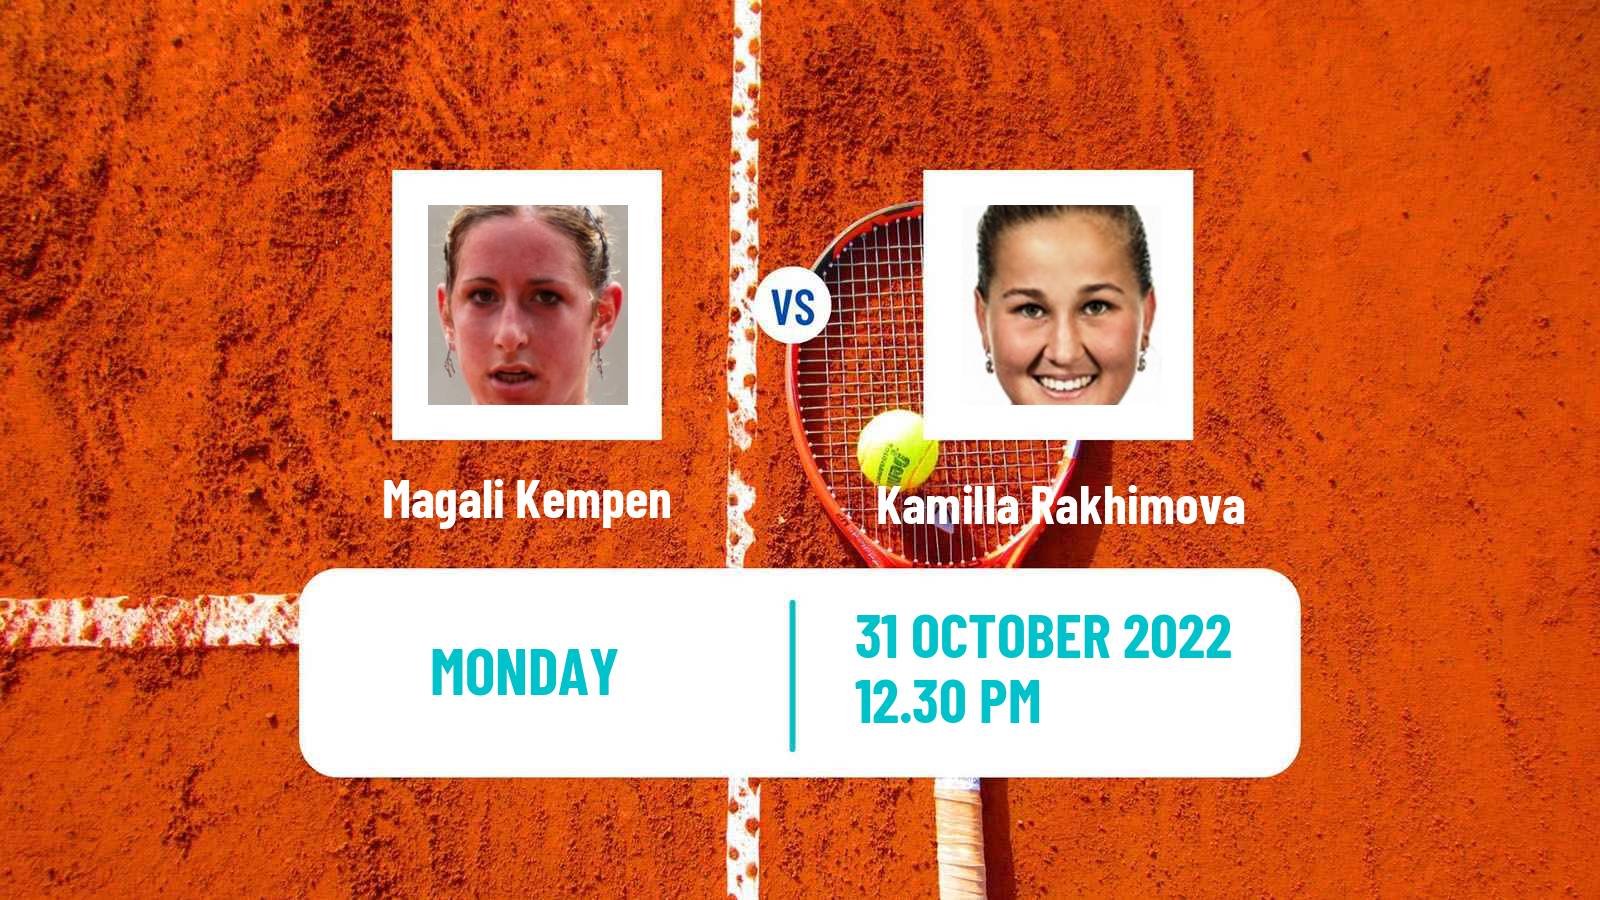 Tennis ITF Tournaments Magali Kempen - Kamilla Rakhimova